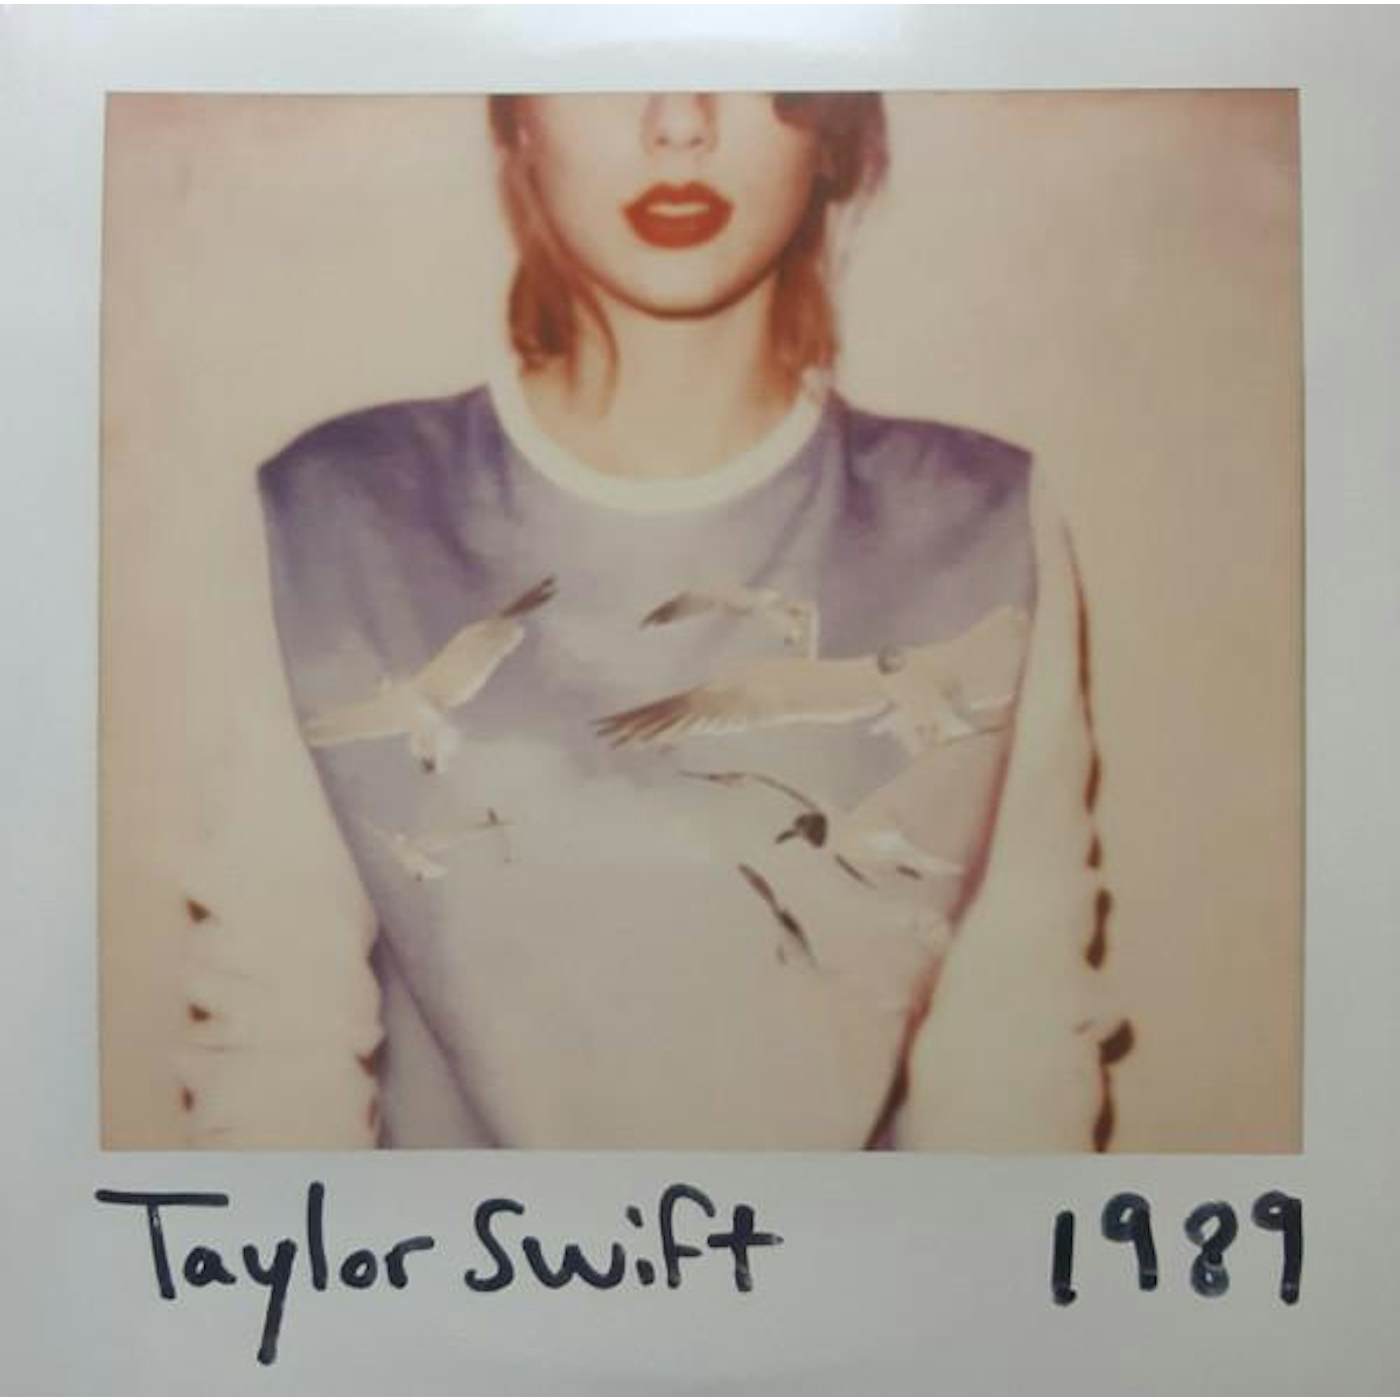 Taylor Swift 1989 Vinyl Record